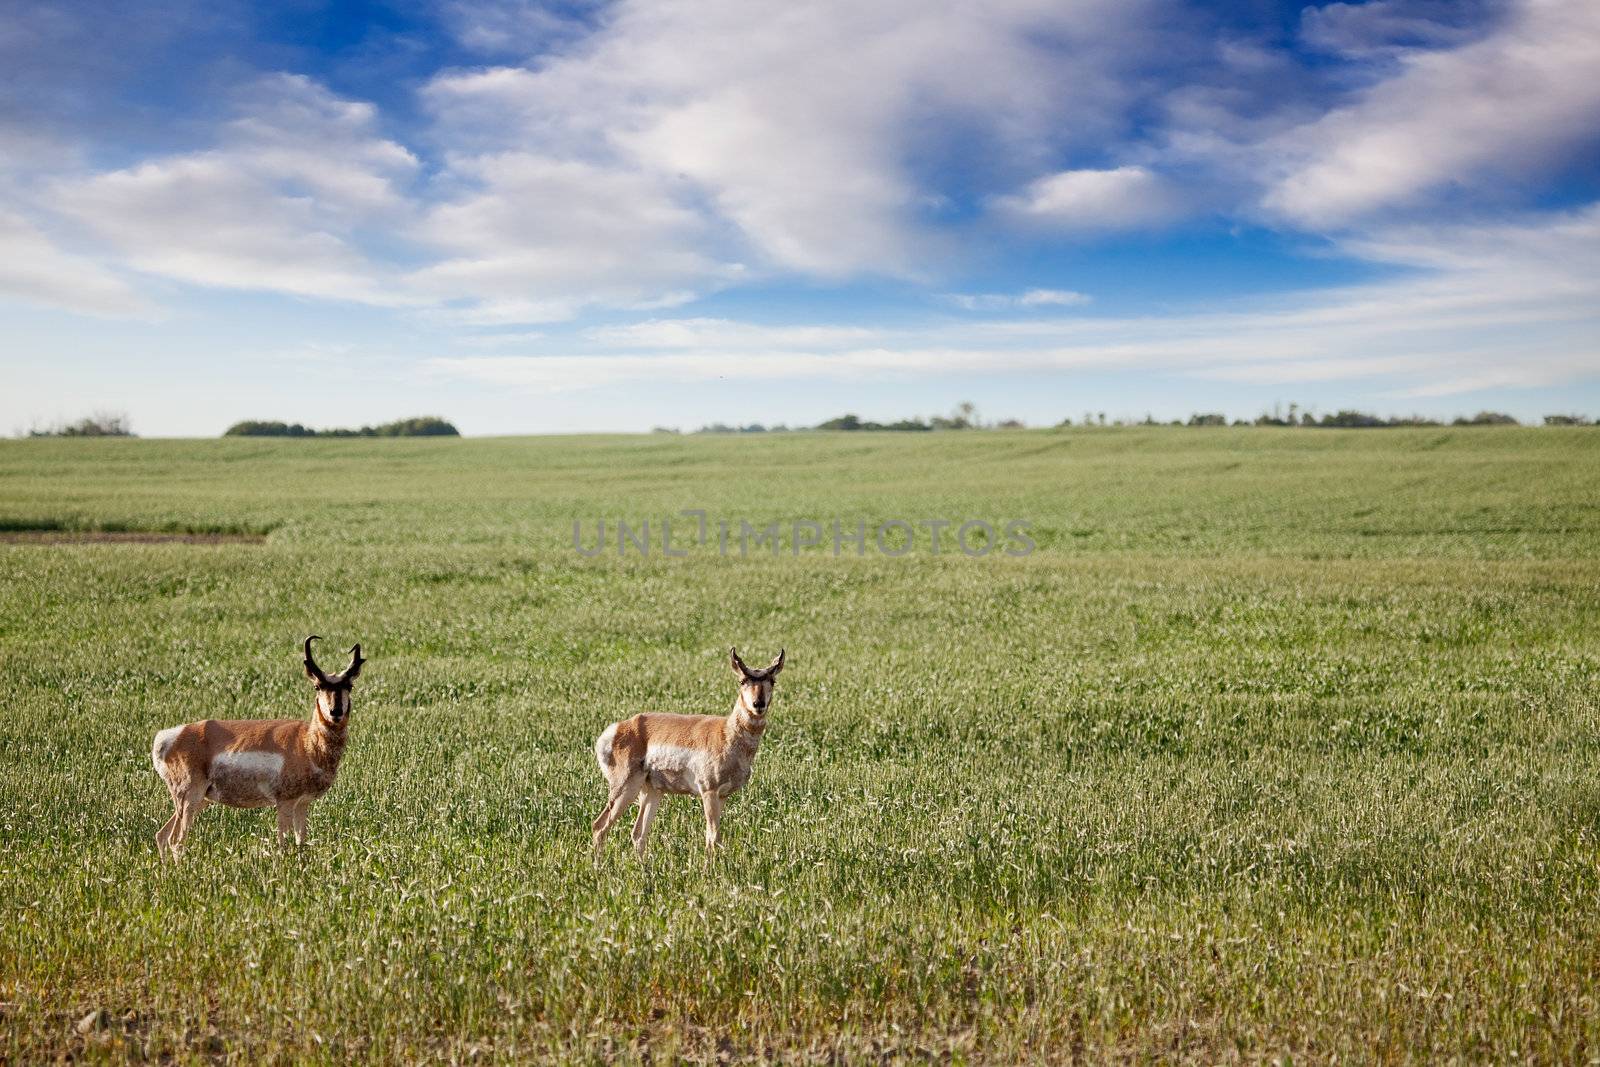 Prong Horned antelope in a field in rural Saskatchean.